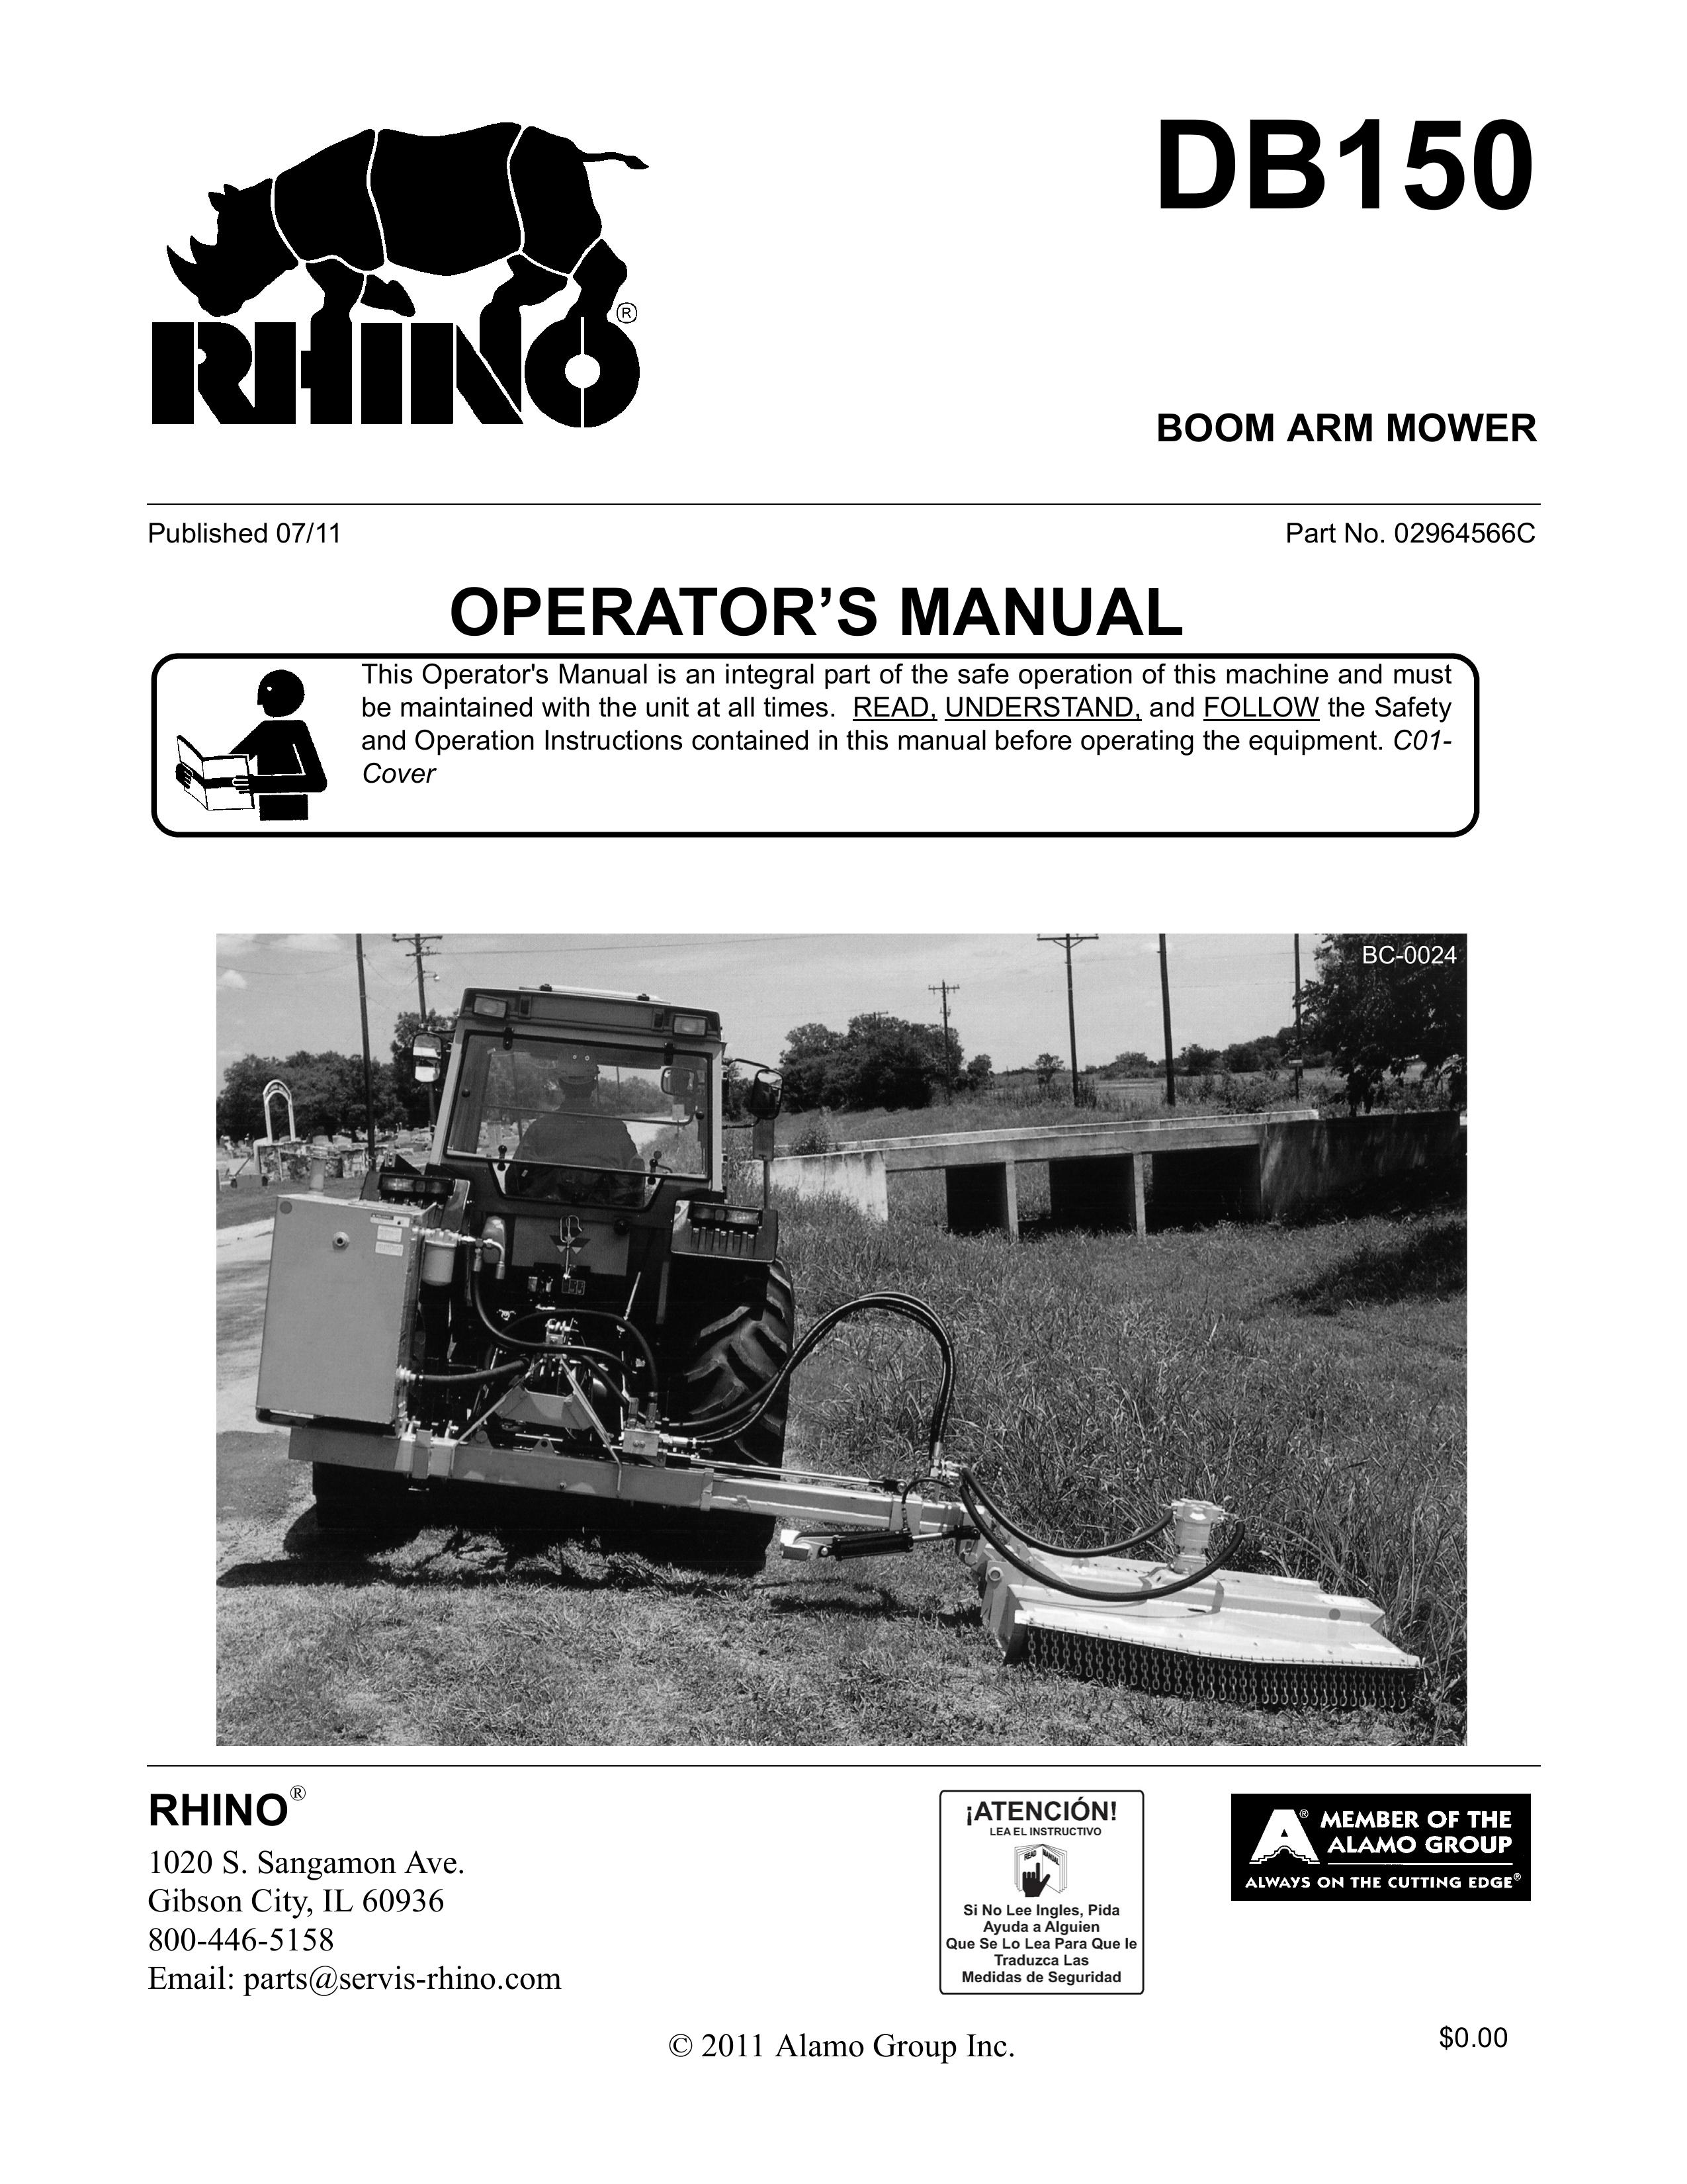 Rhino Mounts DB150 Lawn Mower User Manual